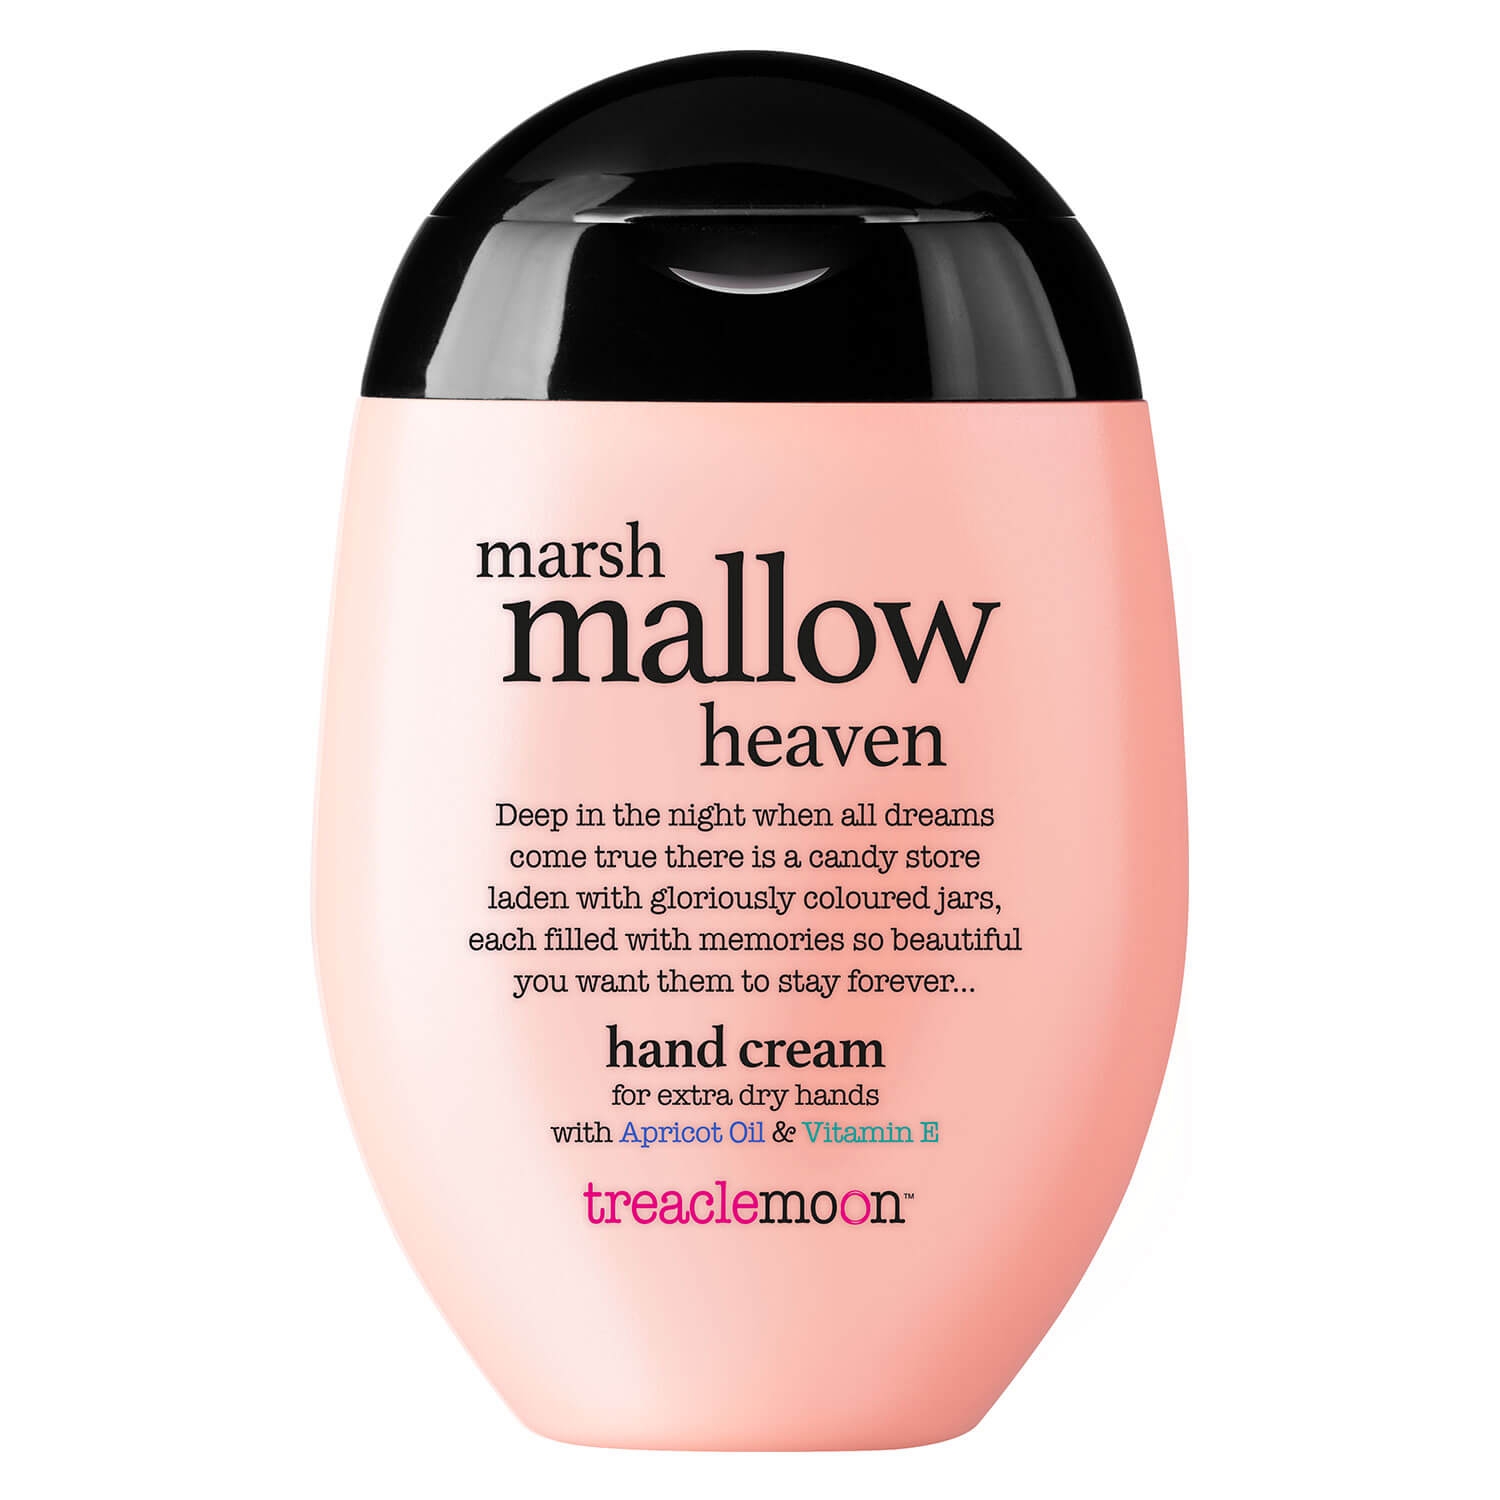 Product image from treaclemoon - marsh mallow heaven hand cream